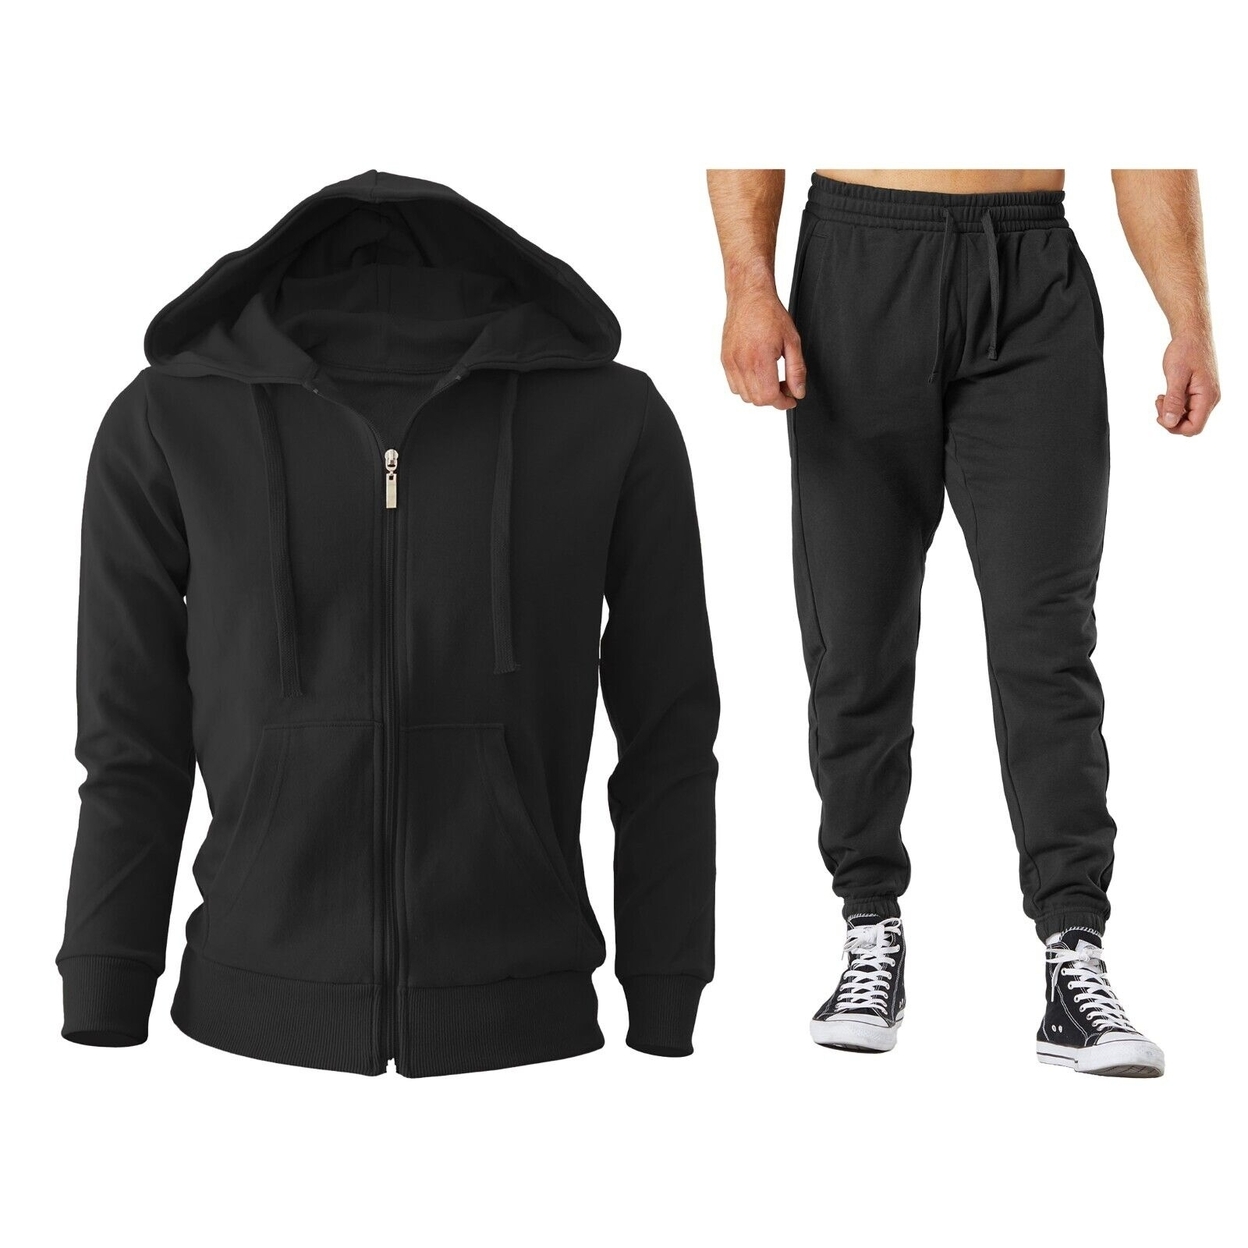 2/4-Piece: Men's Winter Warm Cozy Athletic Multi-Pockets BIG & TALL Sweatsuit Set - Black, 1, X-large